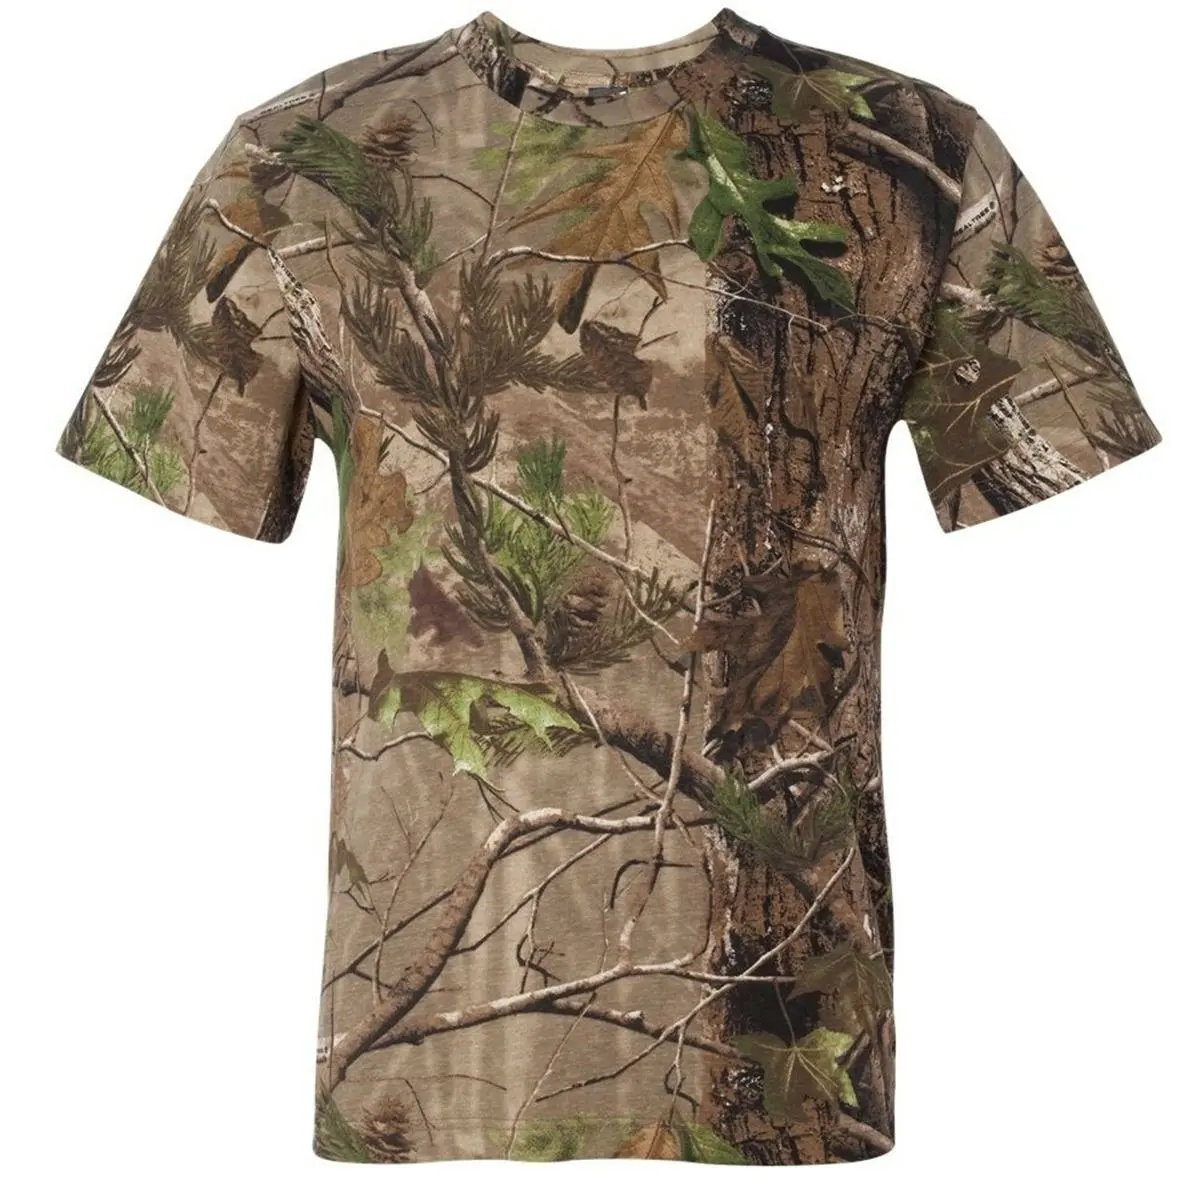 Tree print Jungle printed palm tree real camo T Shirt Tshirt Men T-shirts man 100% Cotton made tees shirts half sleeves